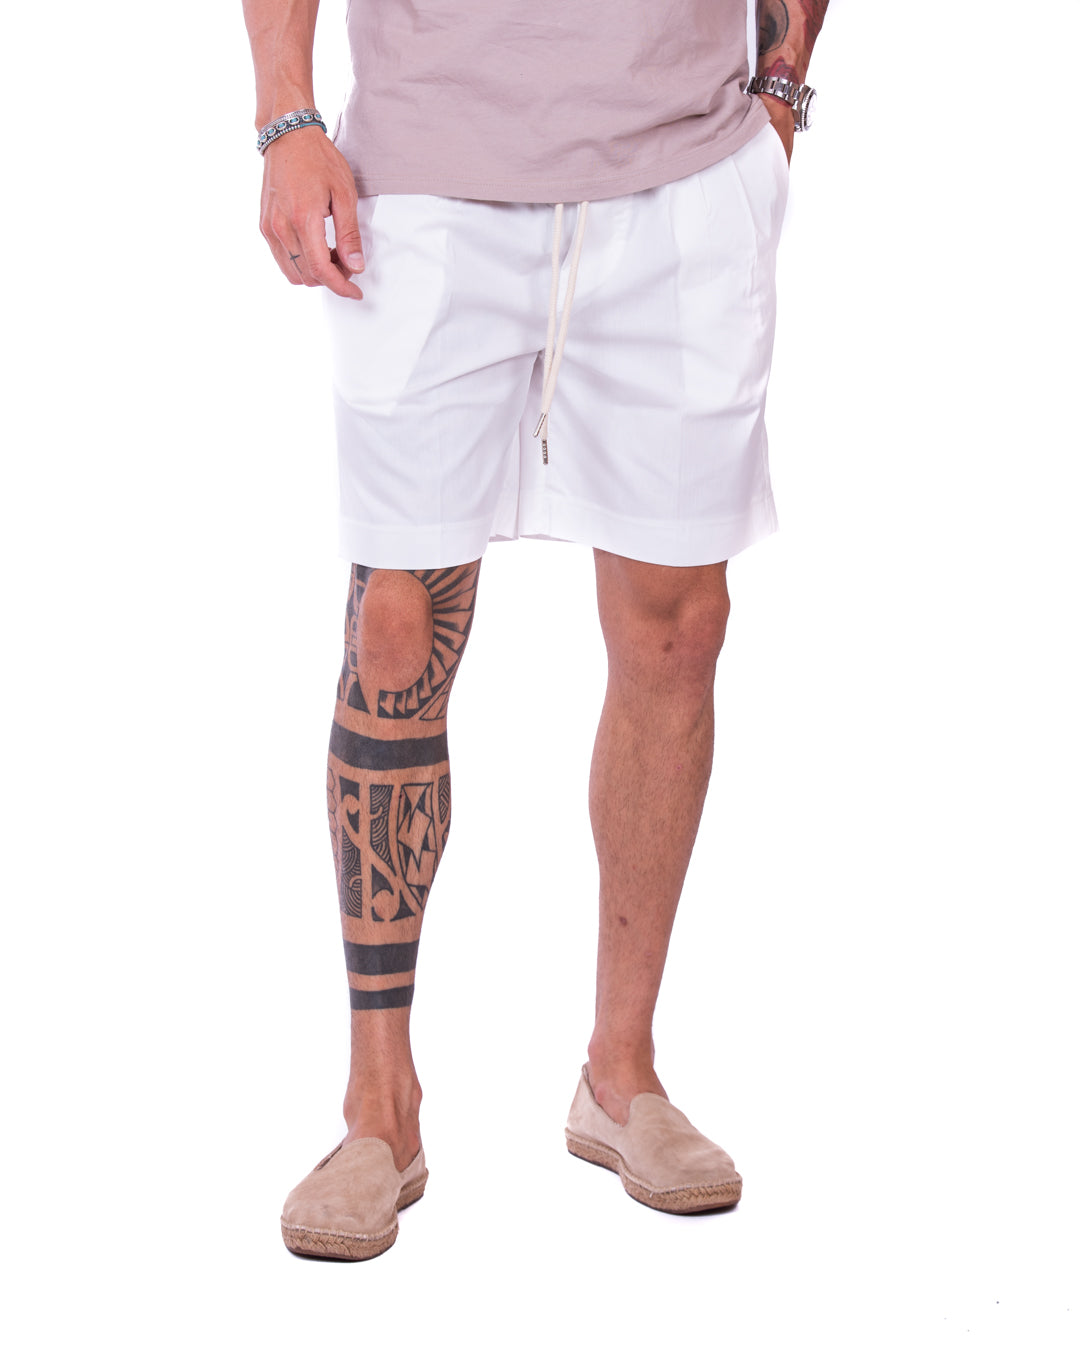 Larry - white cotton Bermuda shorts